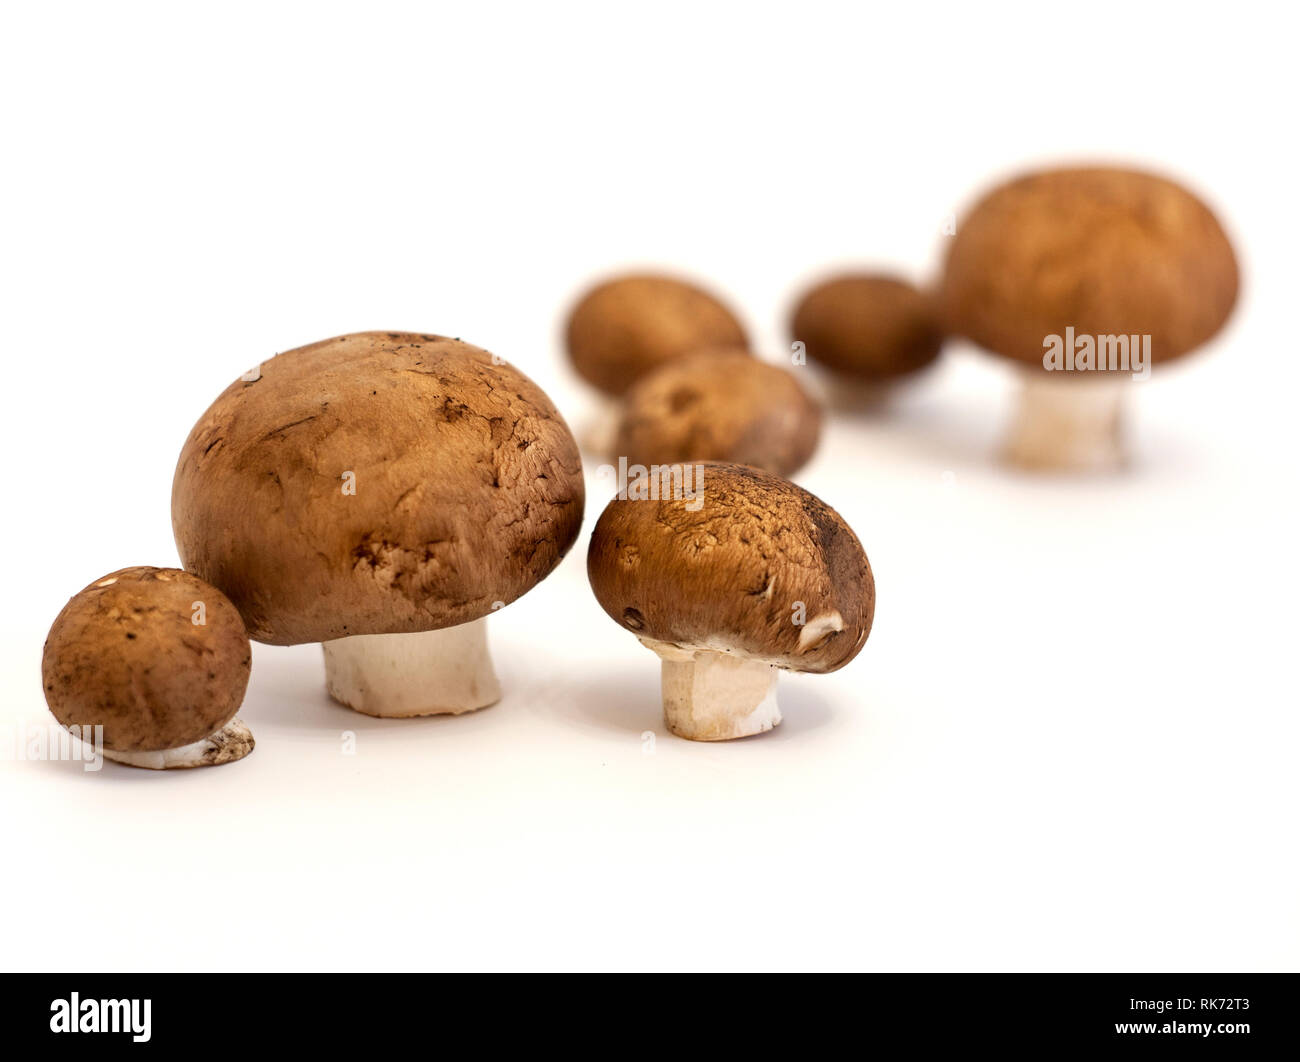 Champignon mushrooms with a brown cap Stock Photo